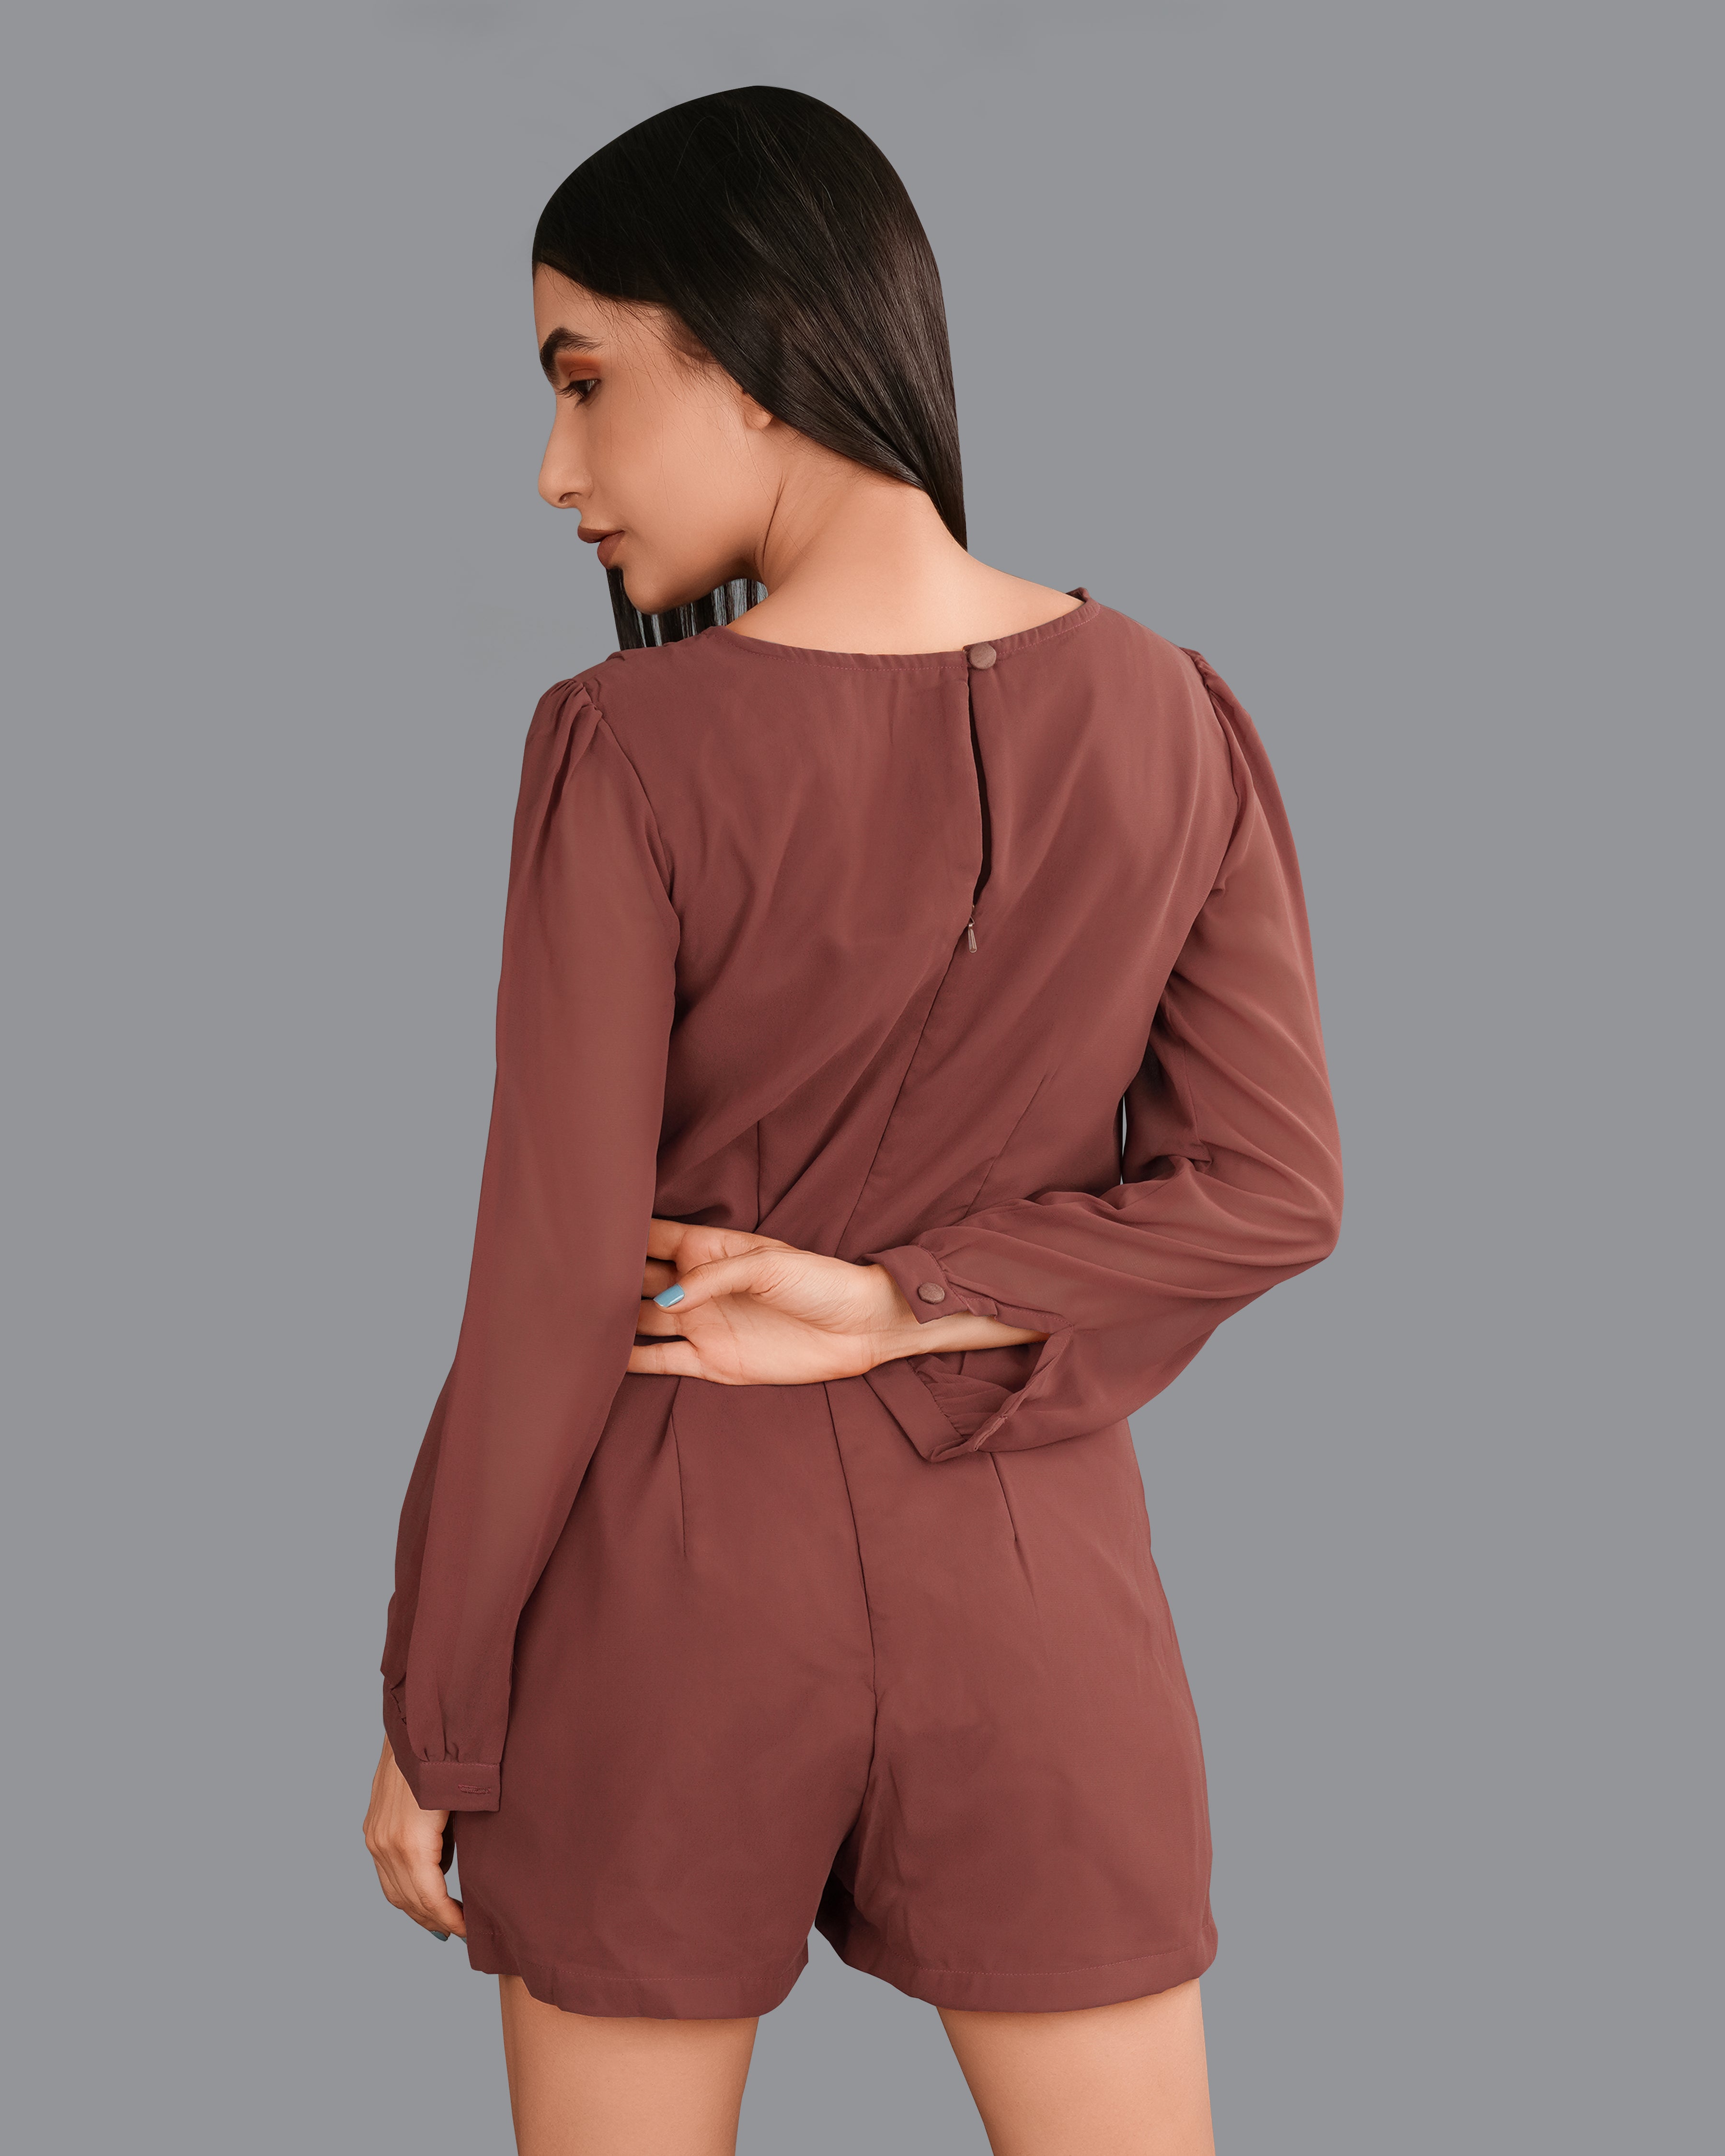 Nutmeg Brown Jumpsuit WD010-32, WD010-34, WD010-36, WD010-38, WD010-40, WD010-42